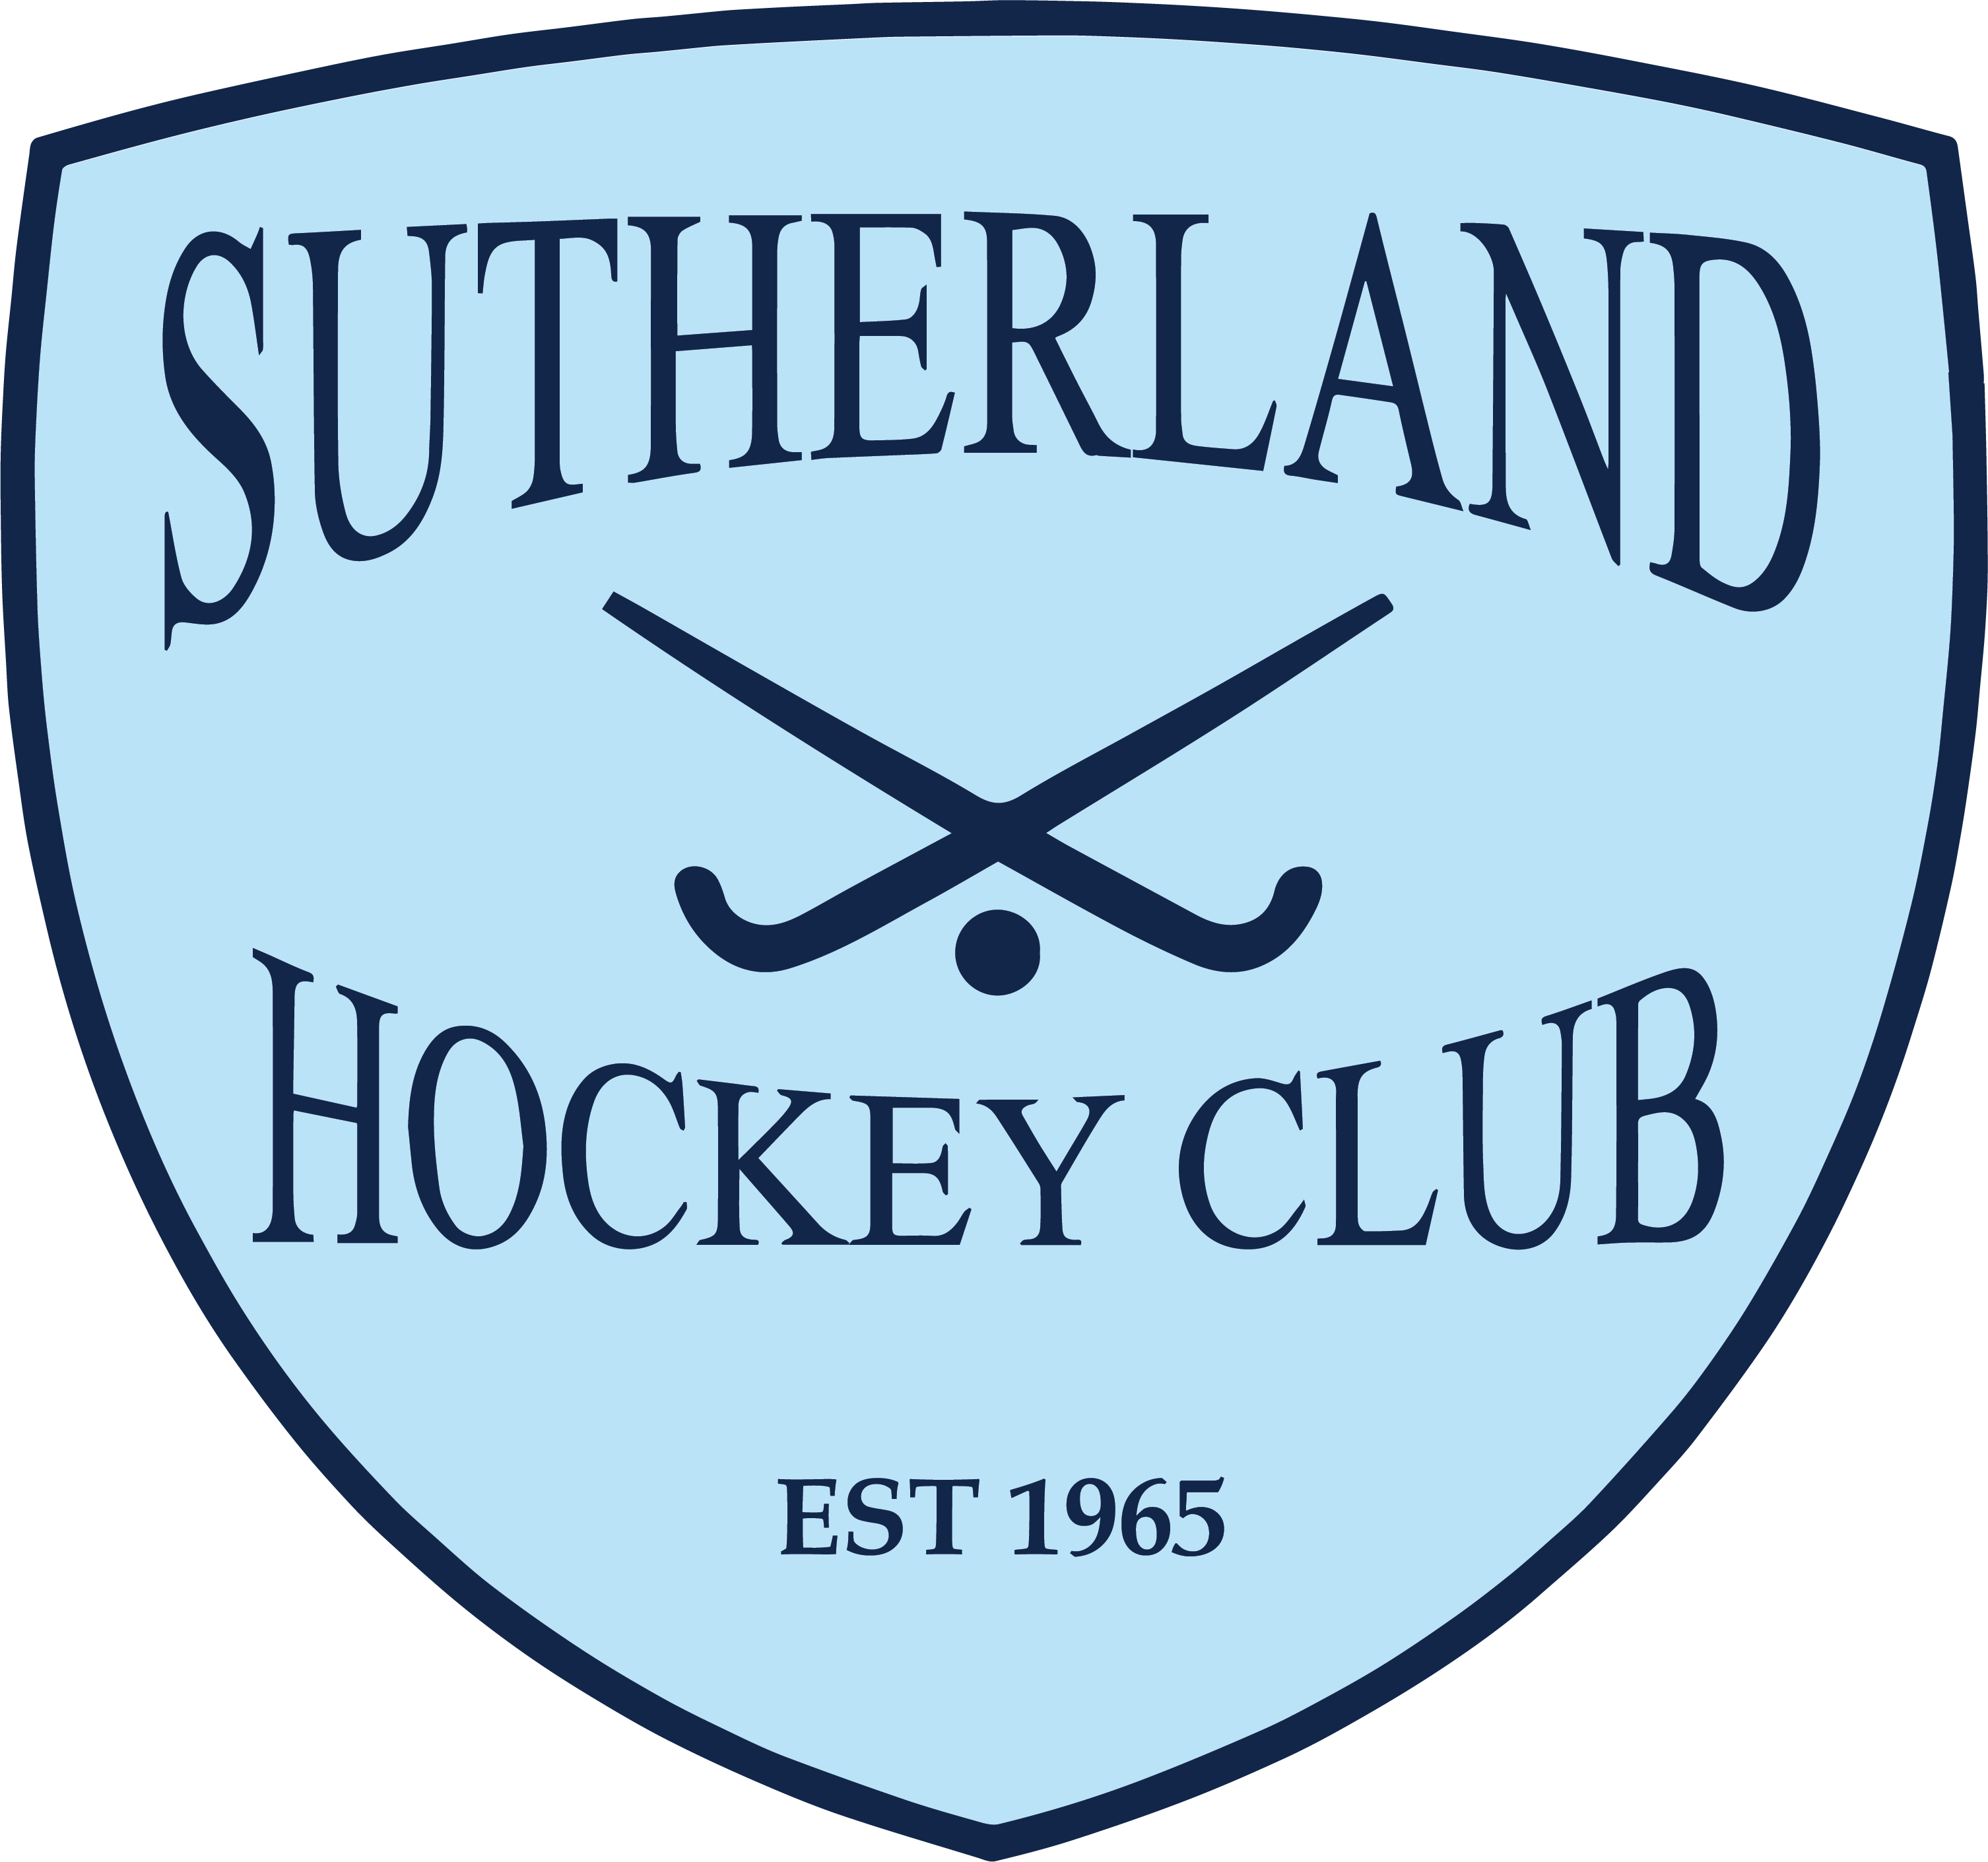 Sutherland Hockey Club